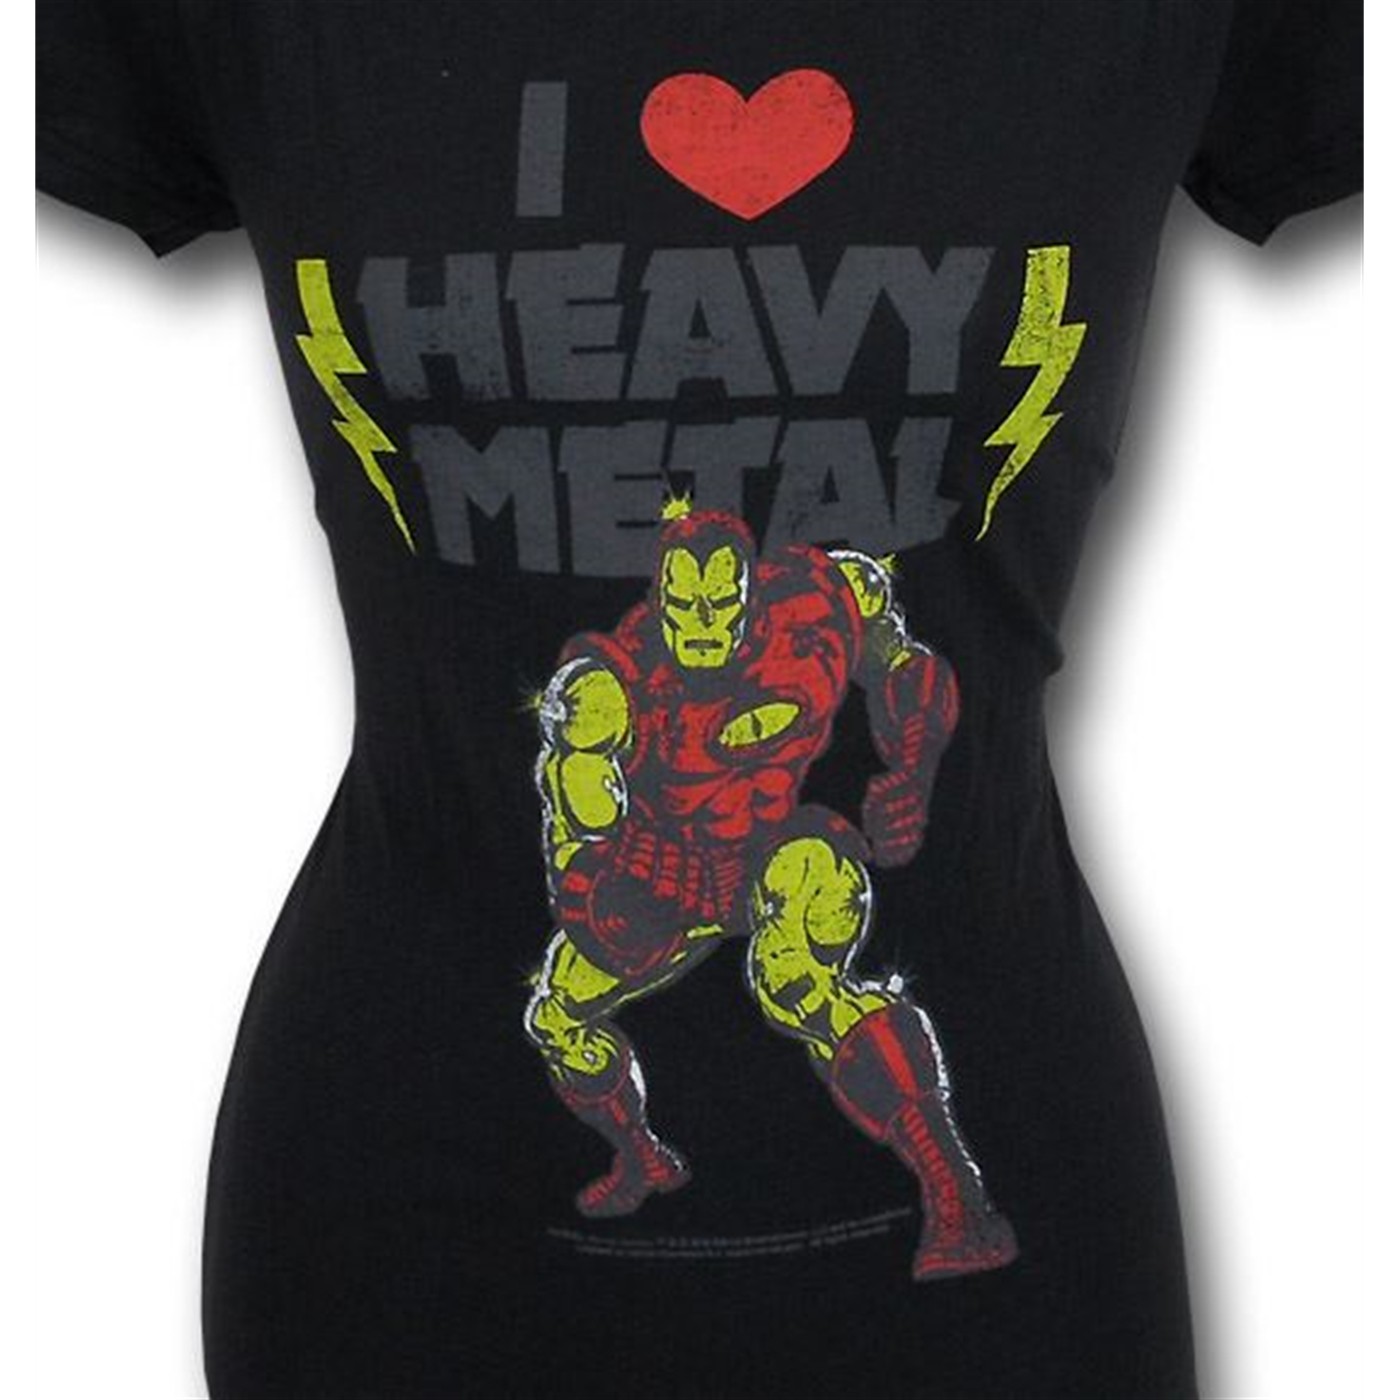 Iron Man Juniors I Love Heavy Metal T-Shirt